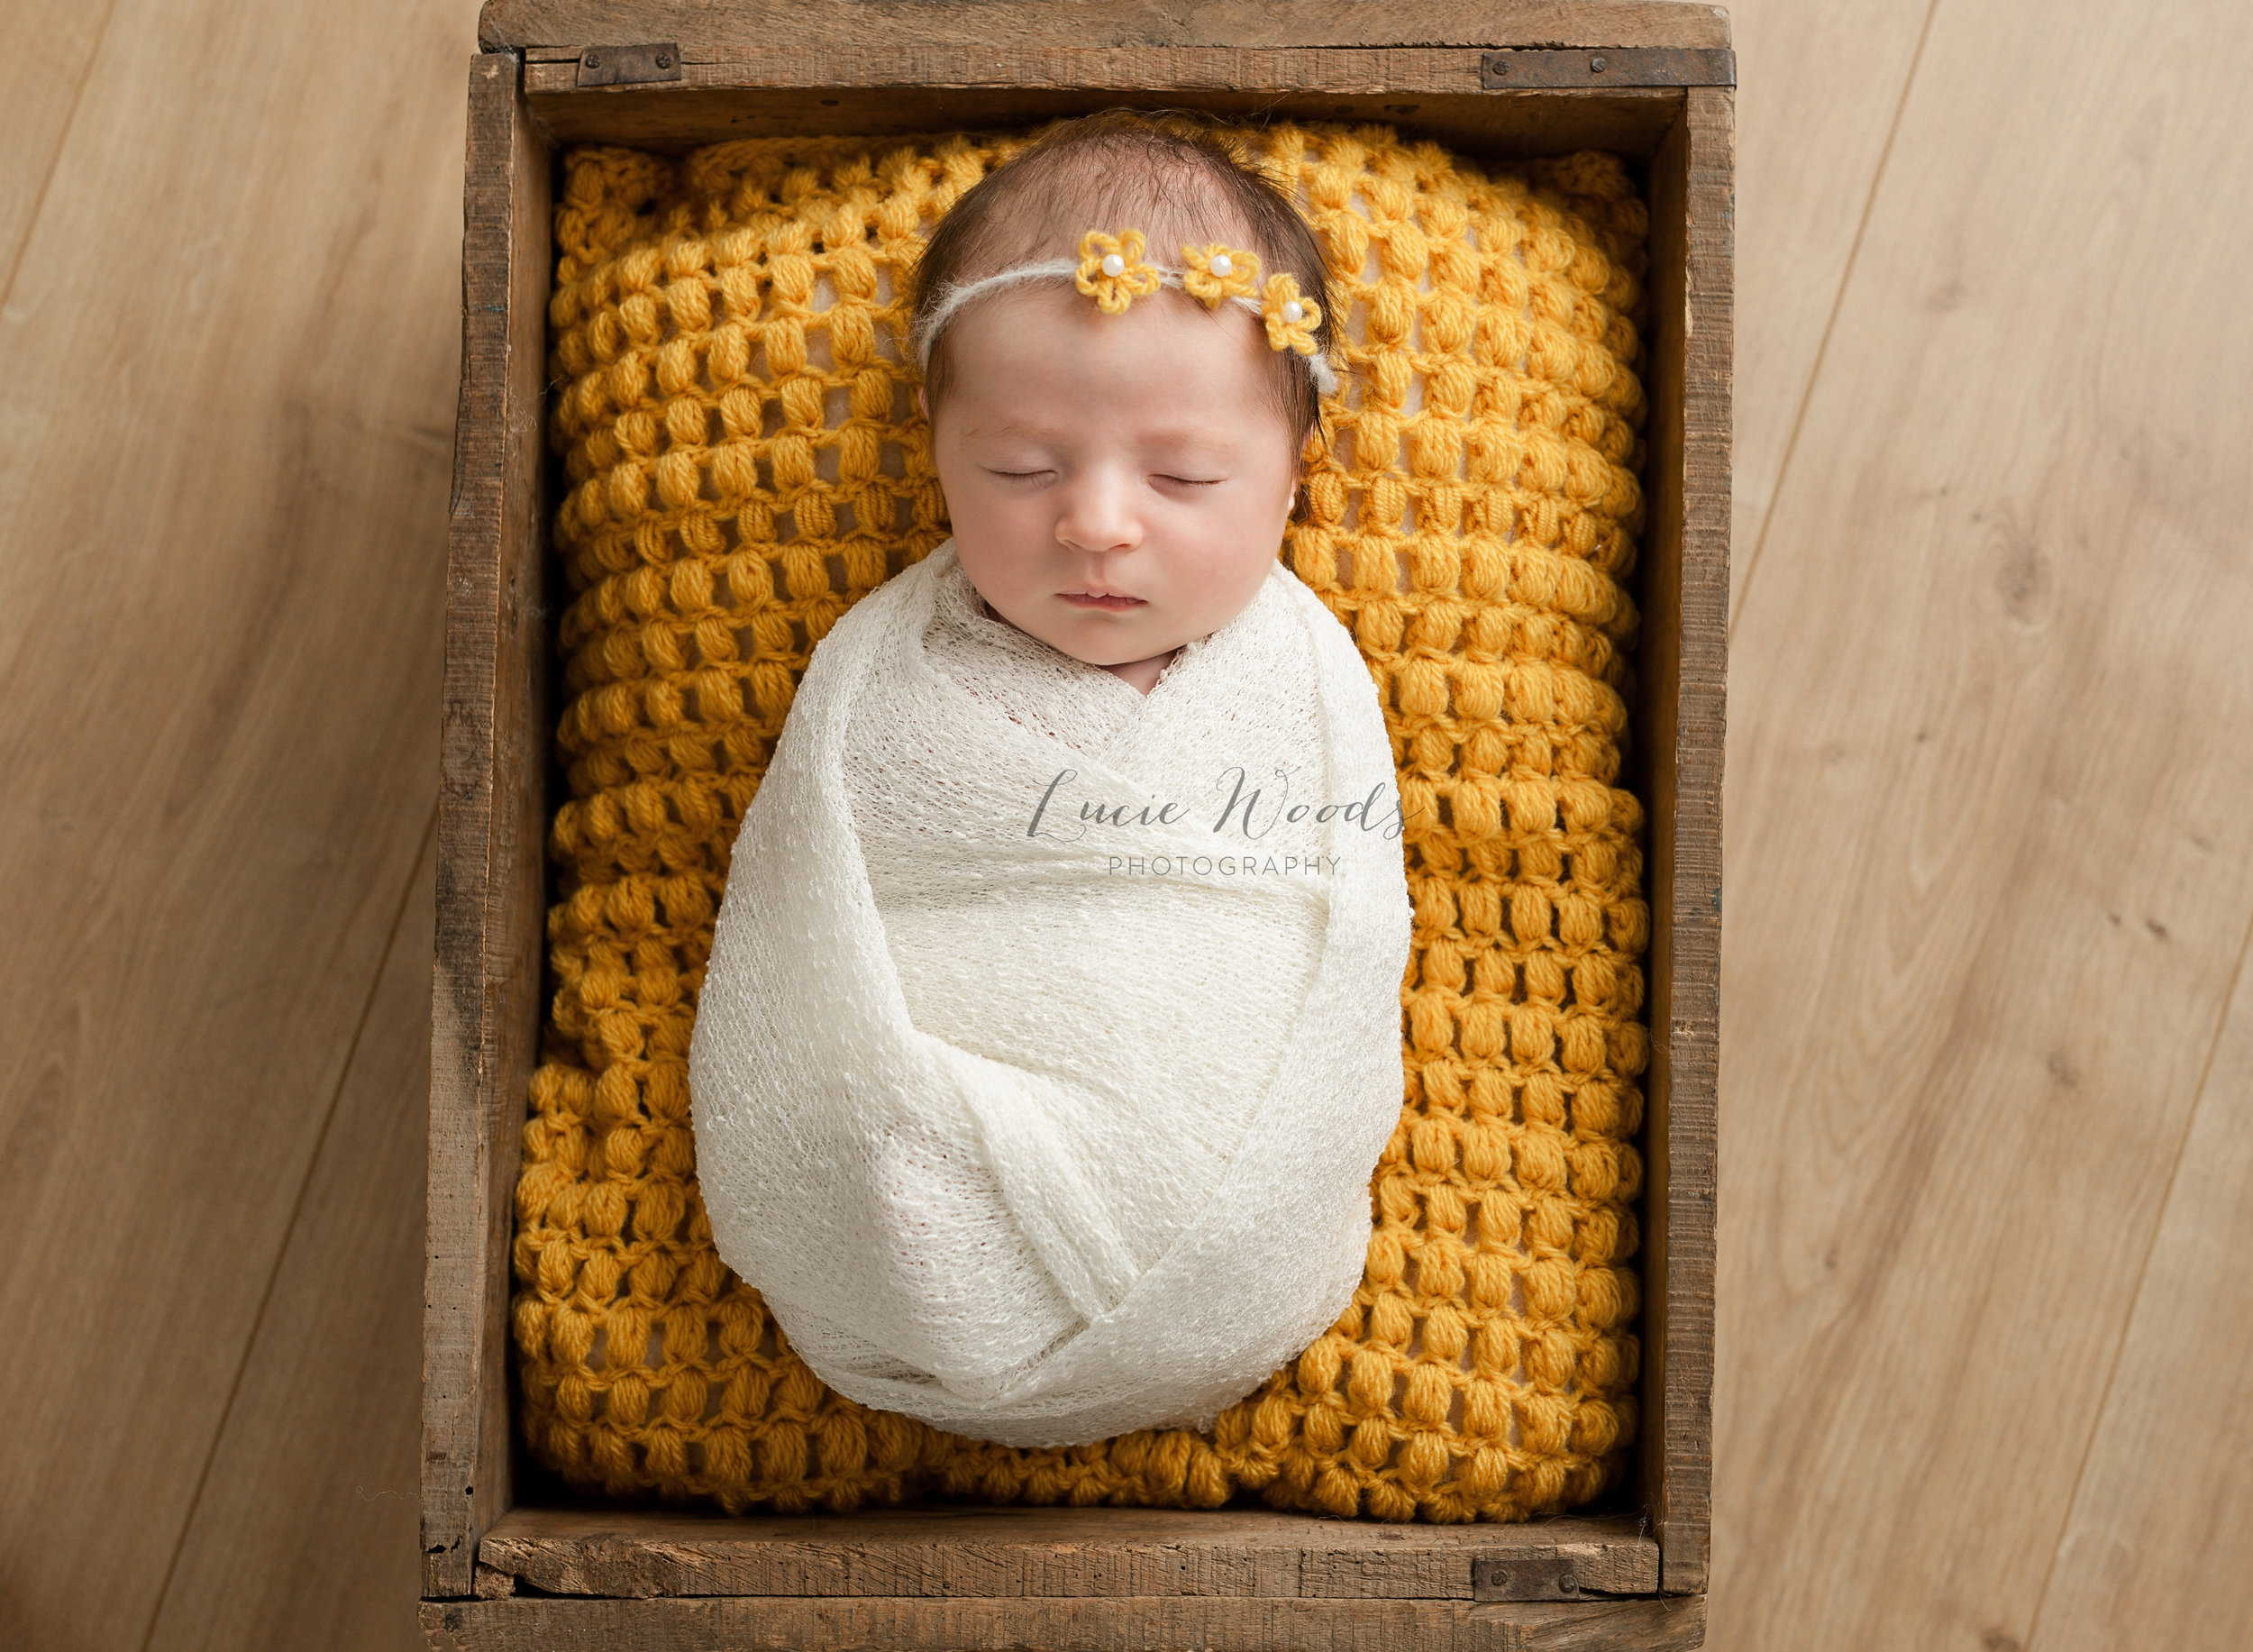 Newborn photographer baby photos photo Manchester Lancashire Ramsbottom Lucie Woods Photography